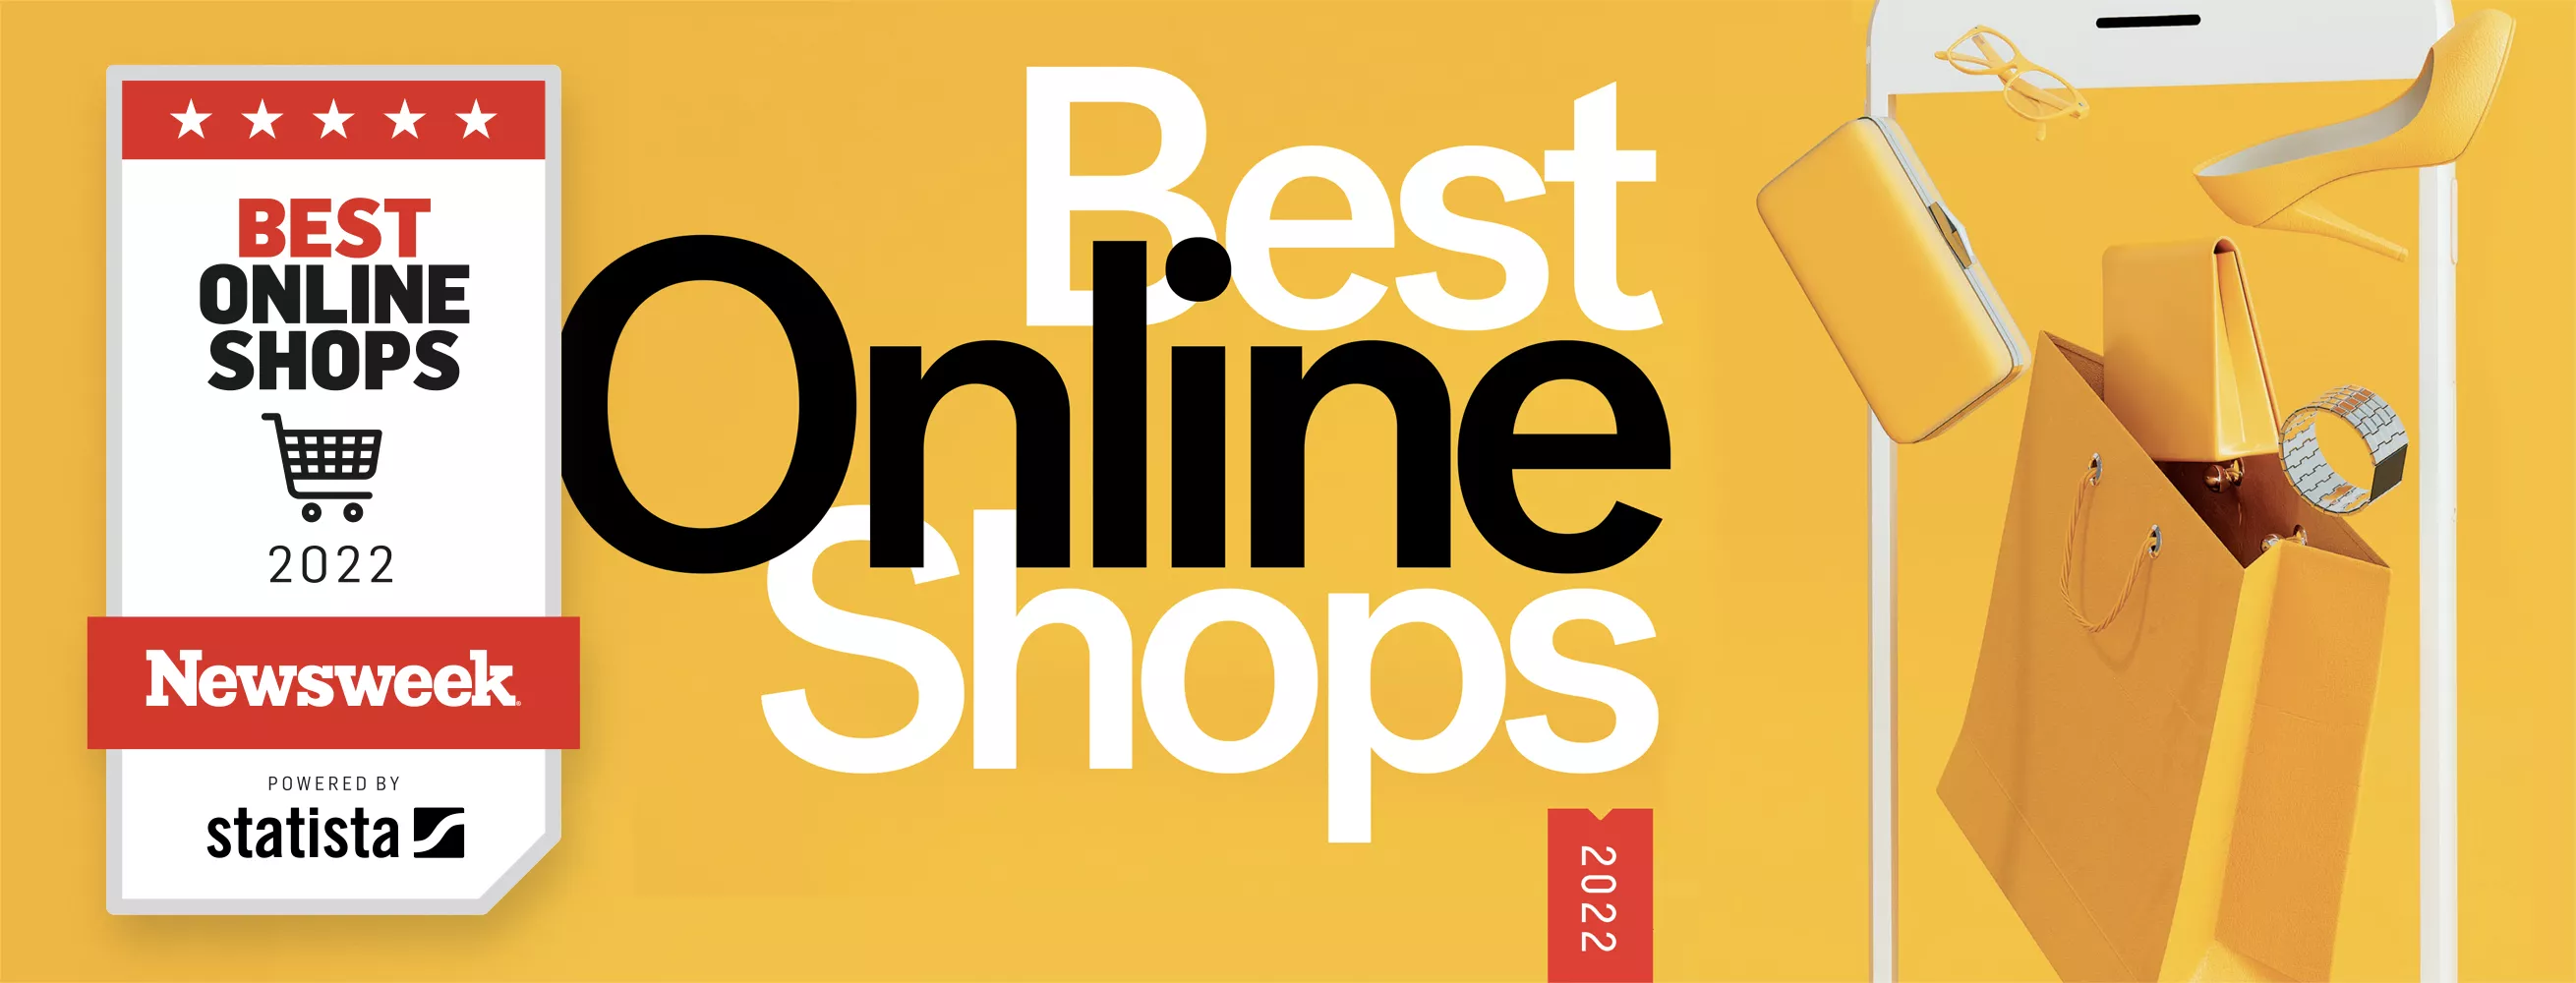 Best Online Shops 2022